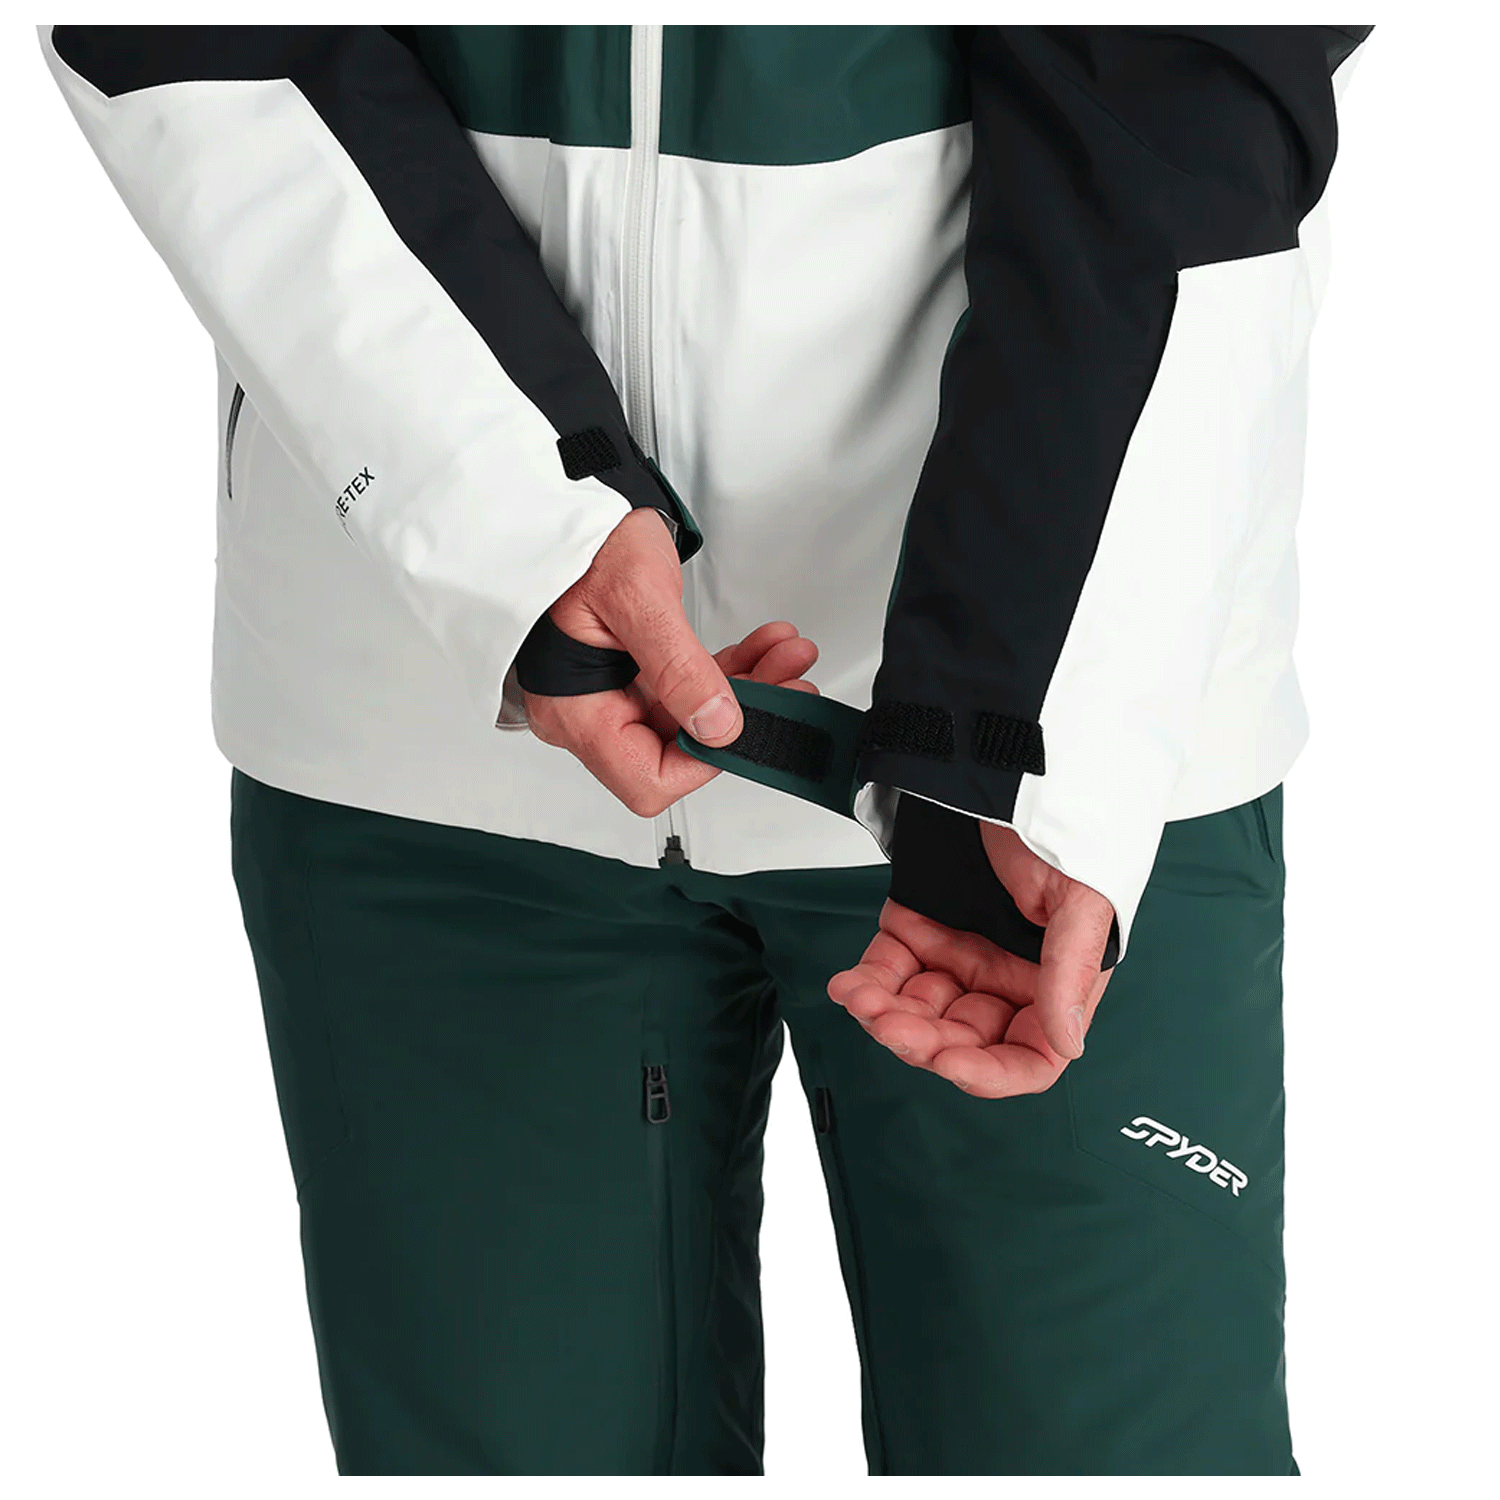 Spyder Vanqysh GORE-TEX Insulated Ski Jacket (Men's)